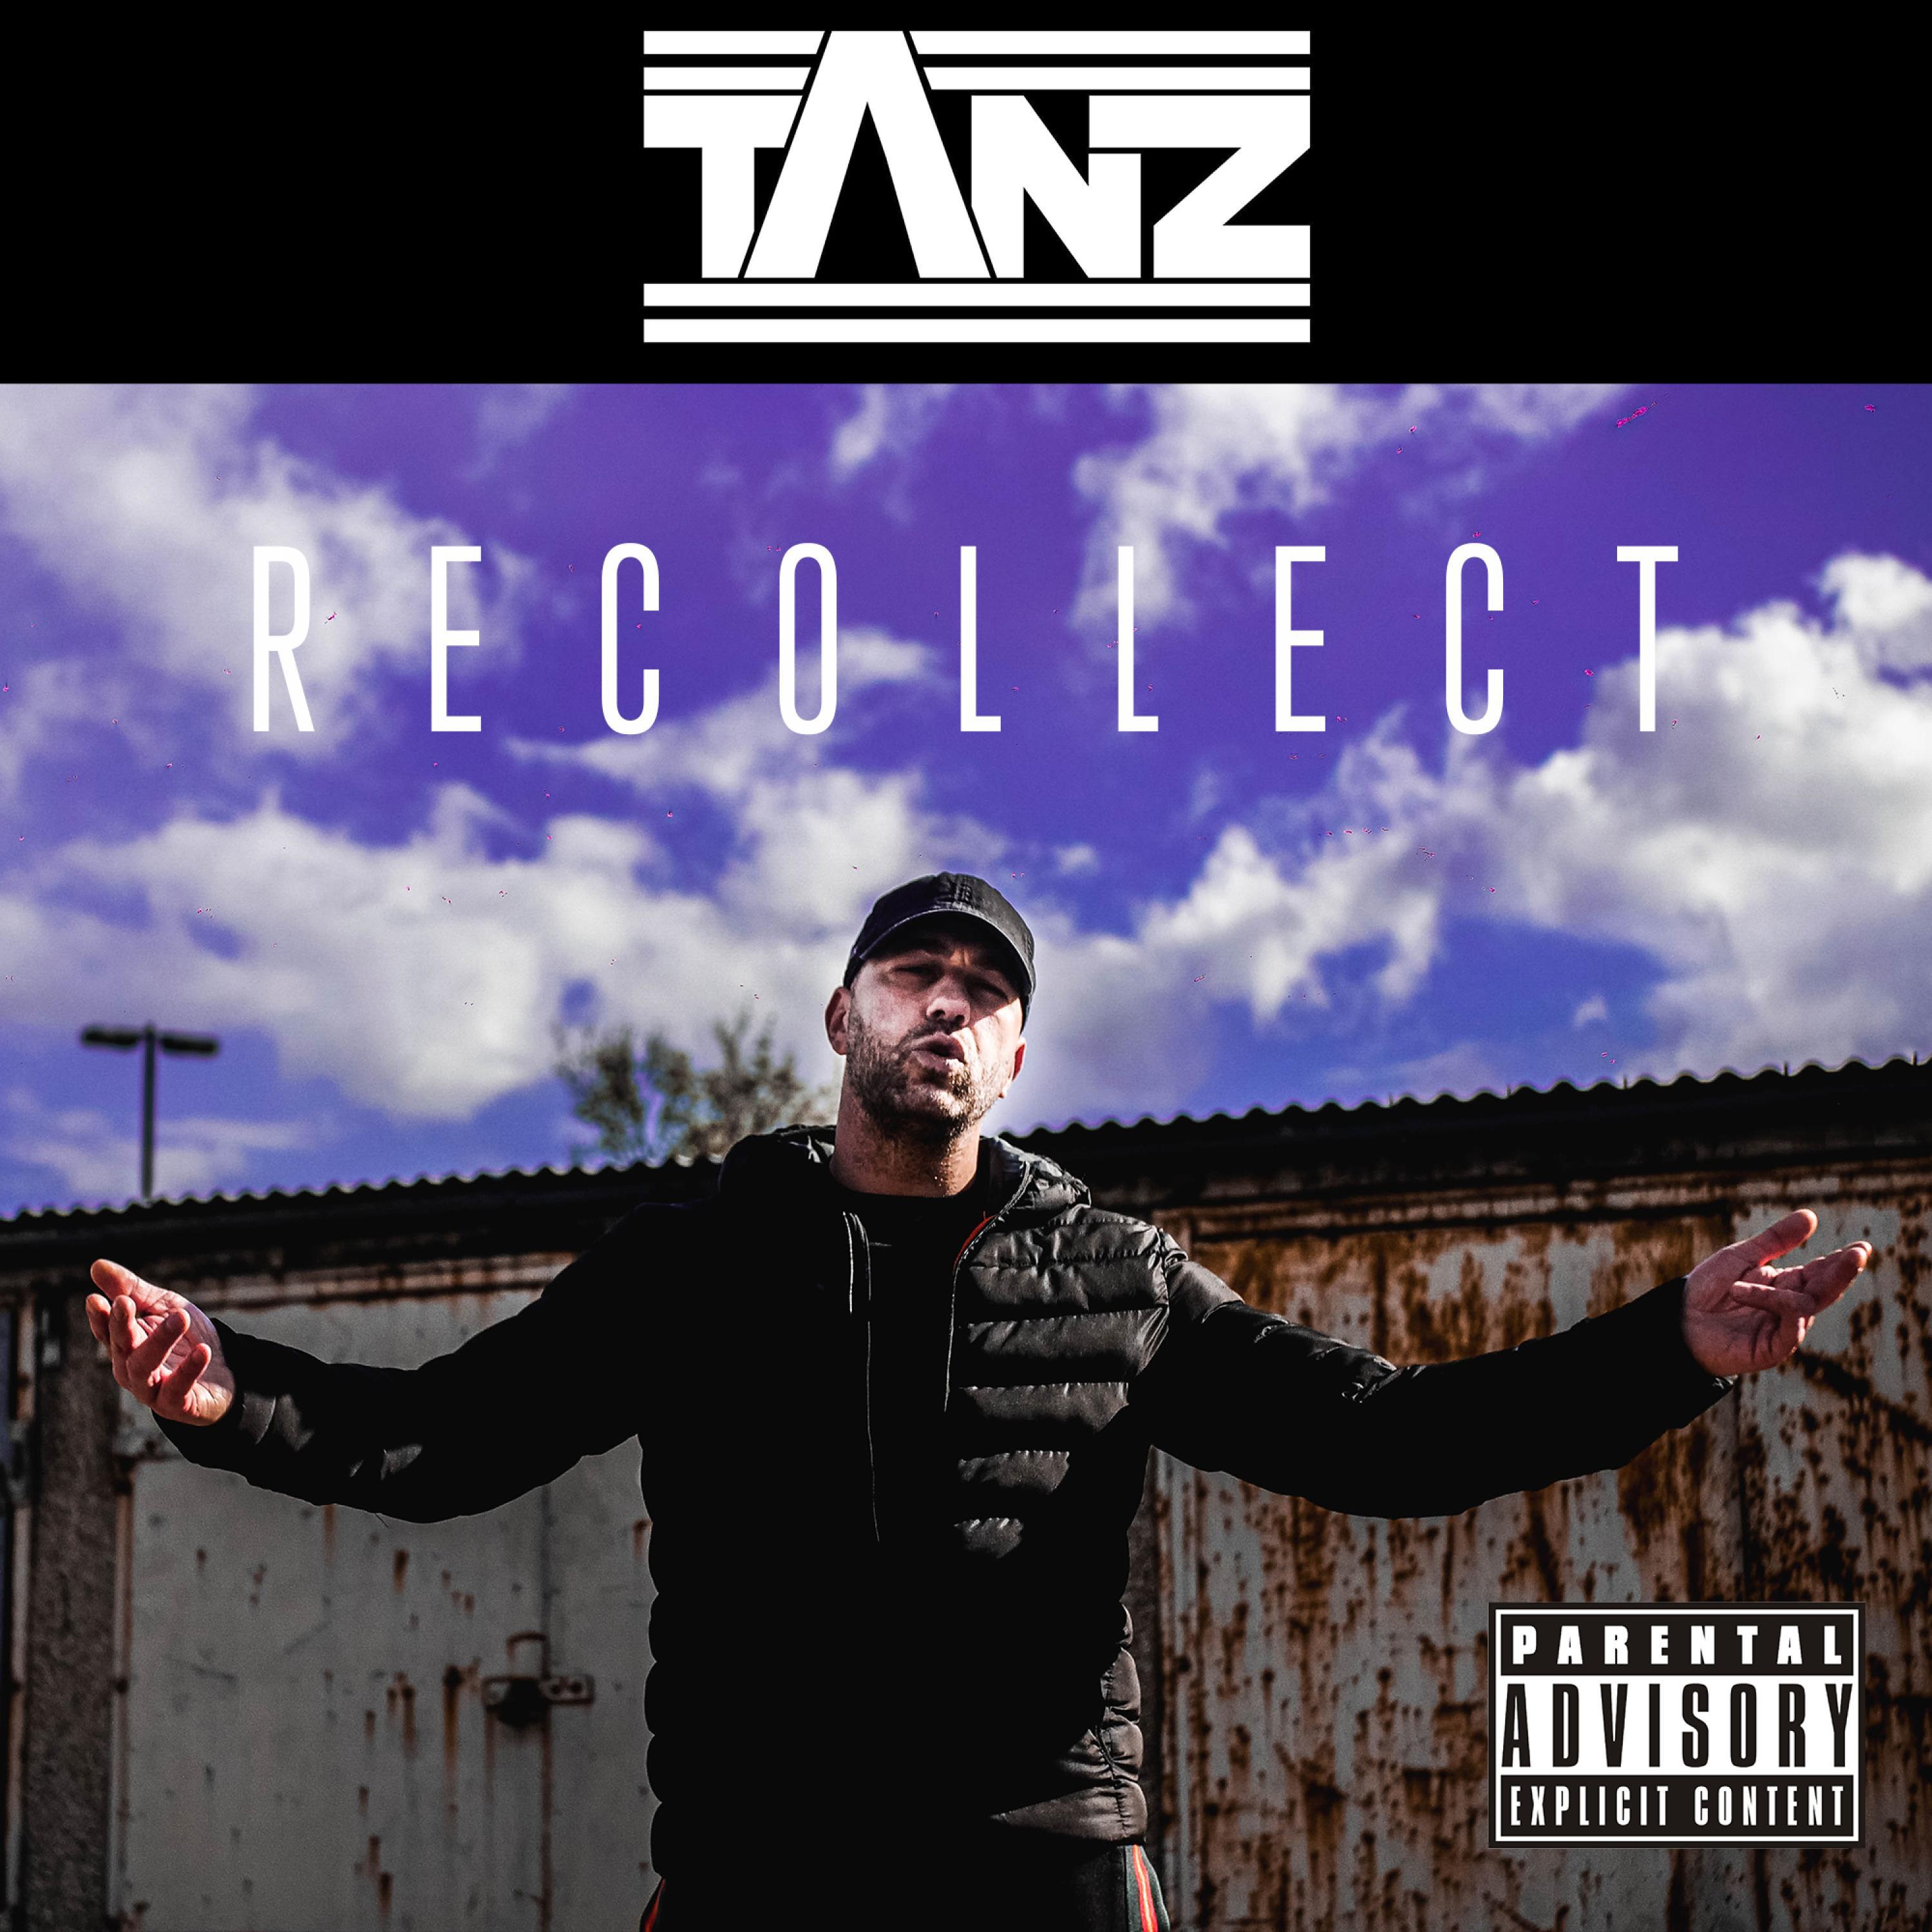 Tanz - Recollect